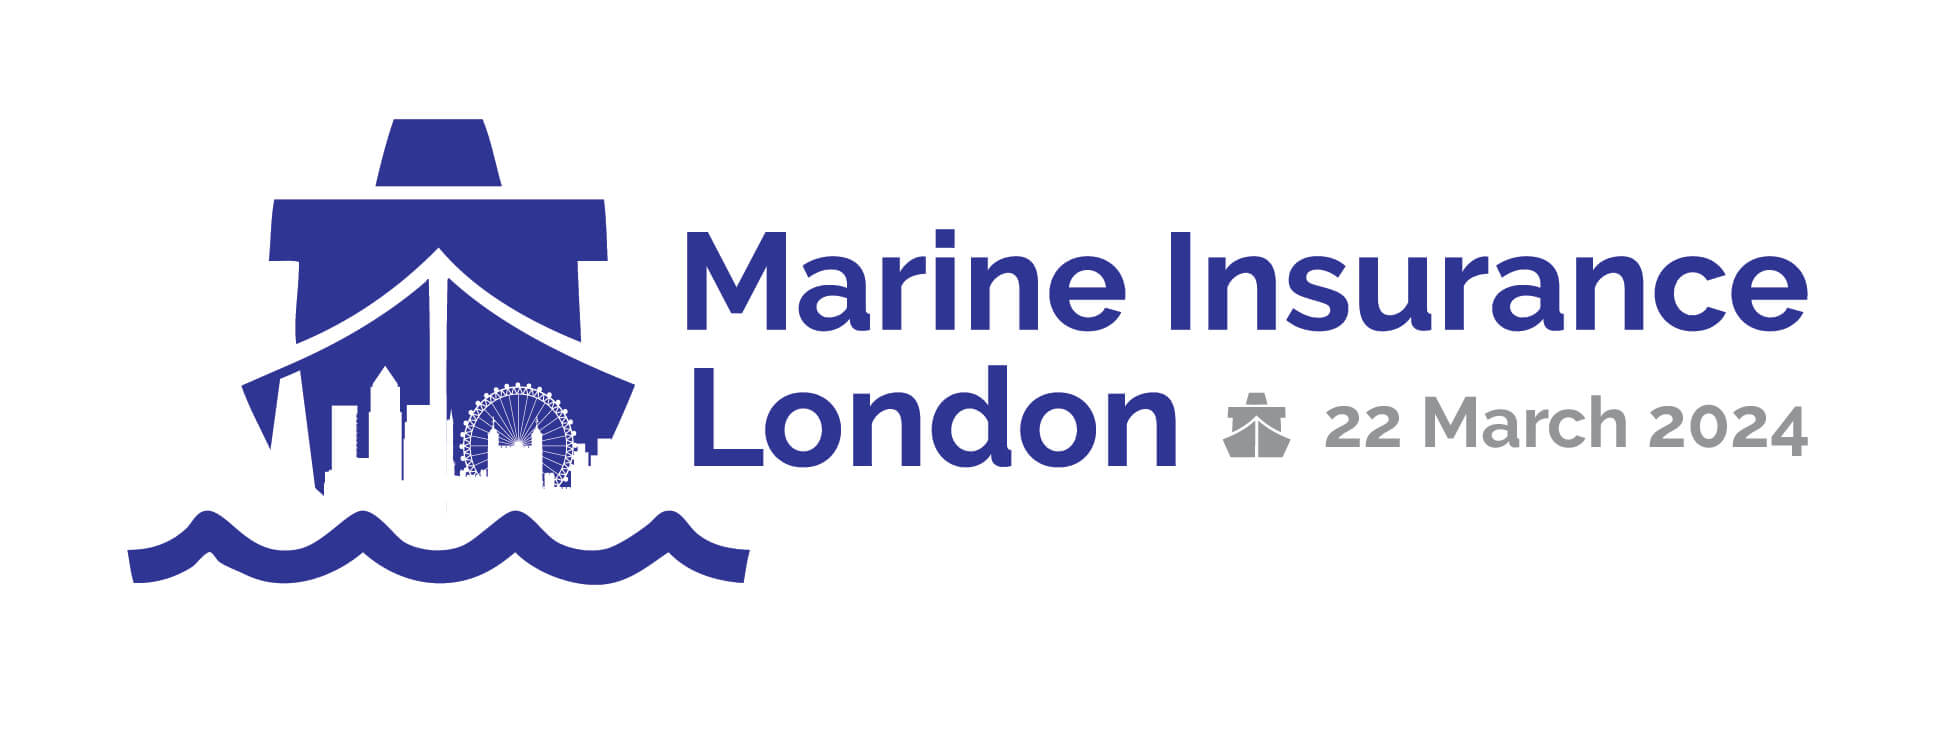 Marine Insurance London 2024